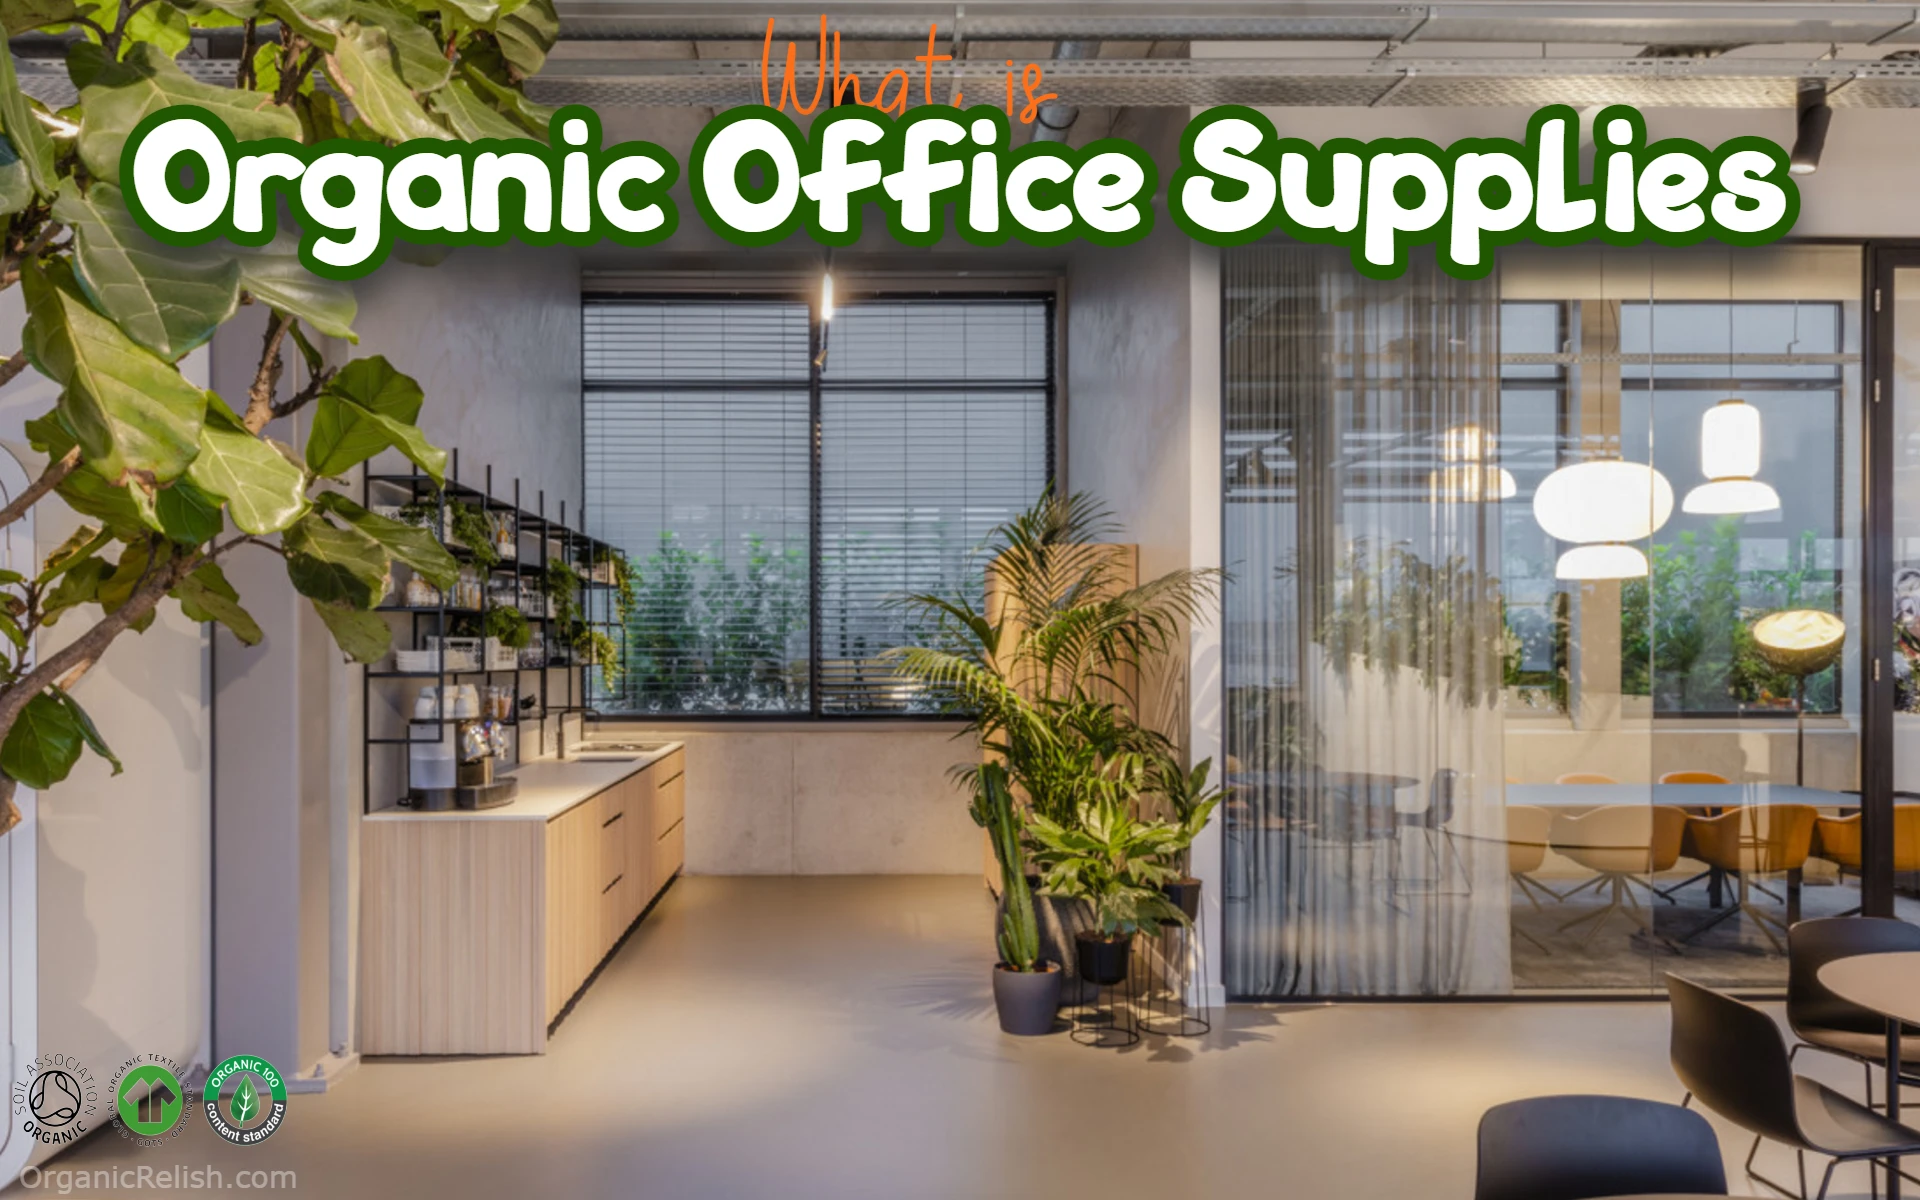 Benefits of Organic Office Supplies